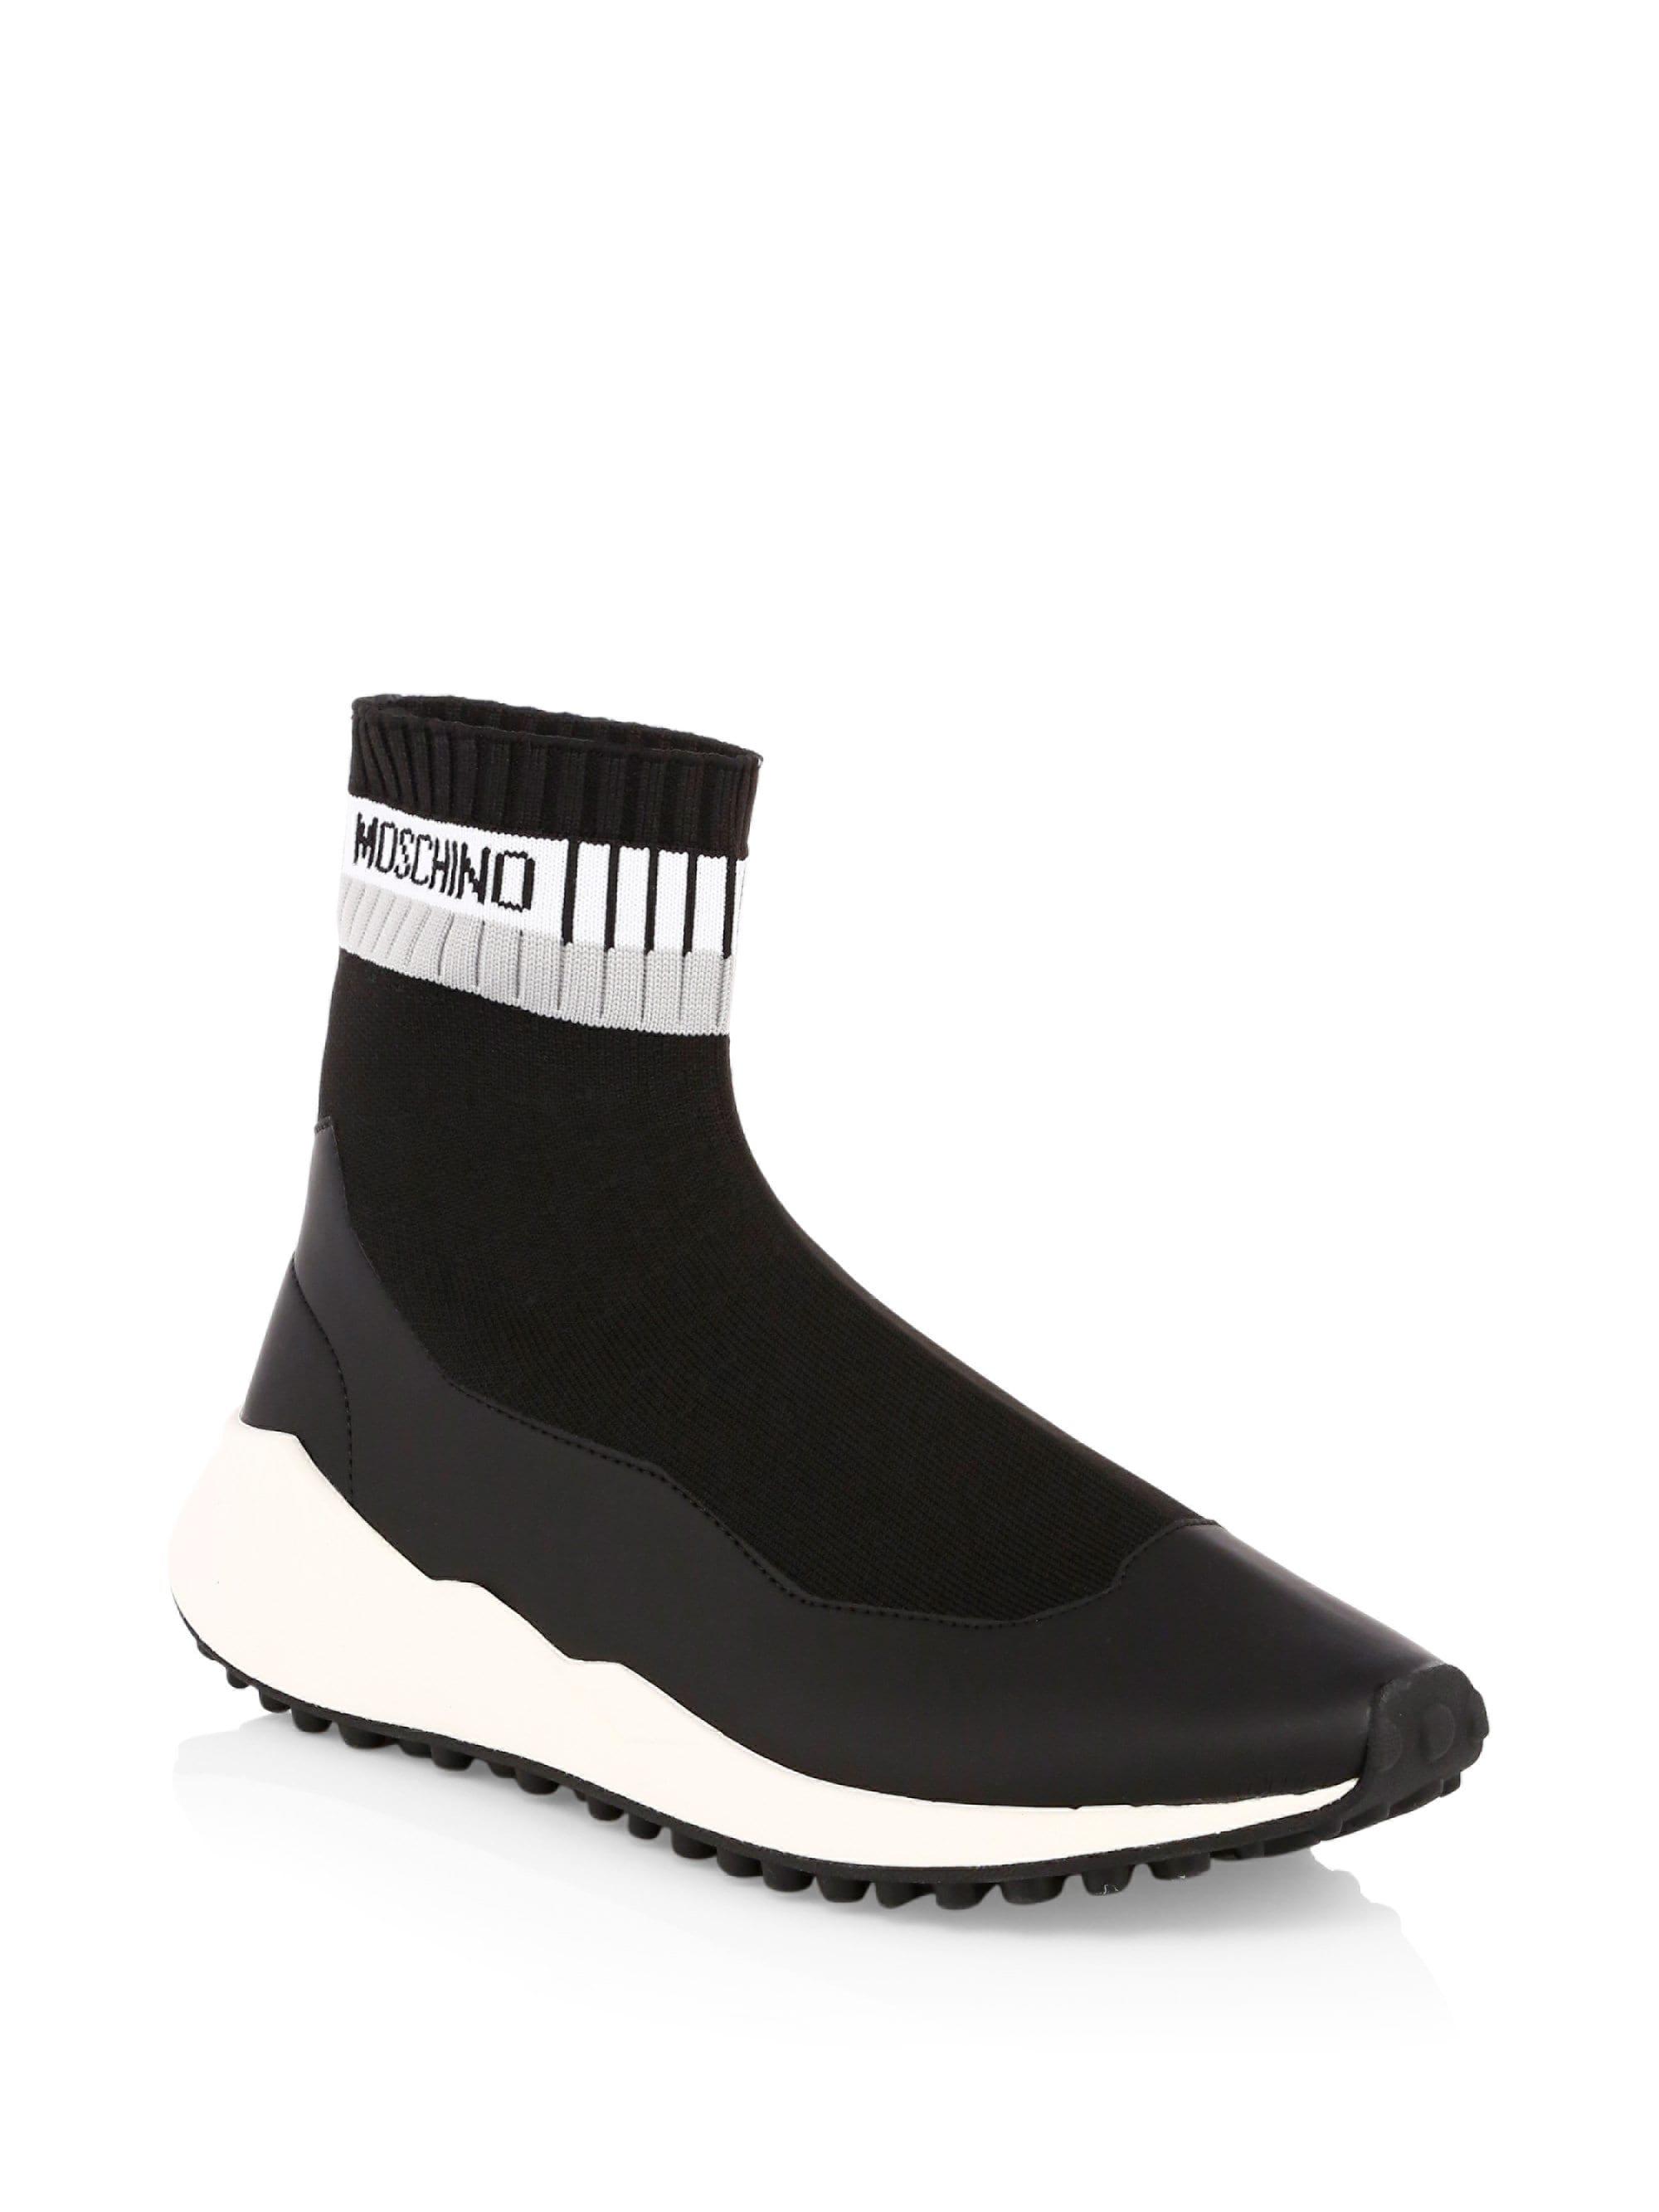 Moschino Neoprene Stamp Sock Sneakers in Black for Men - Lyst